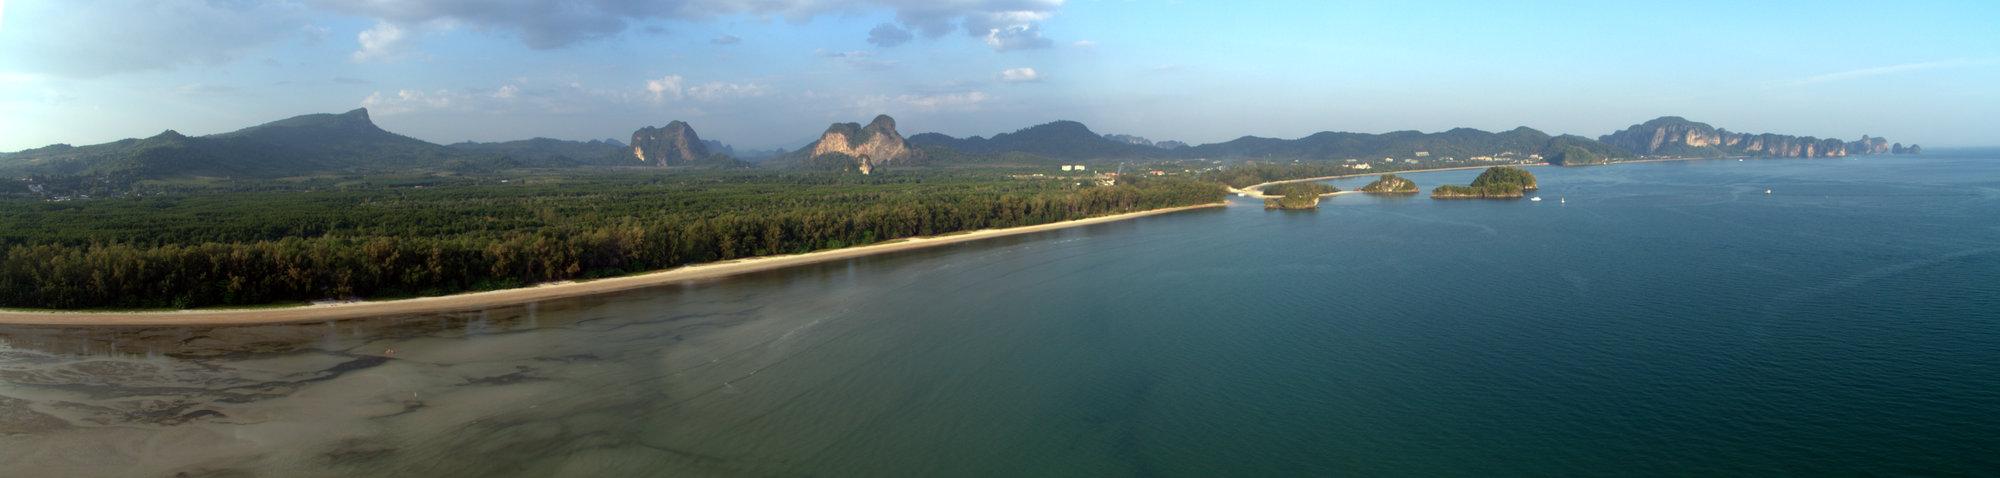 aerial panorama beach landscape